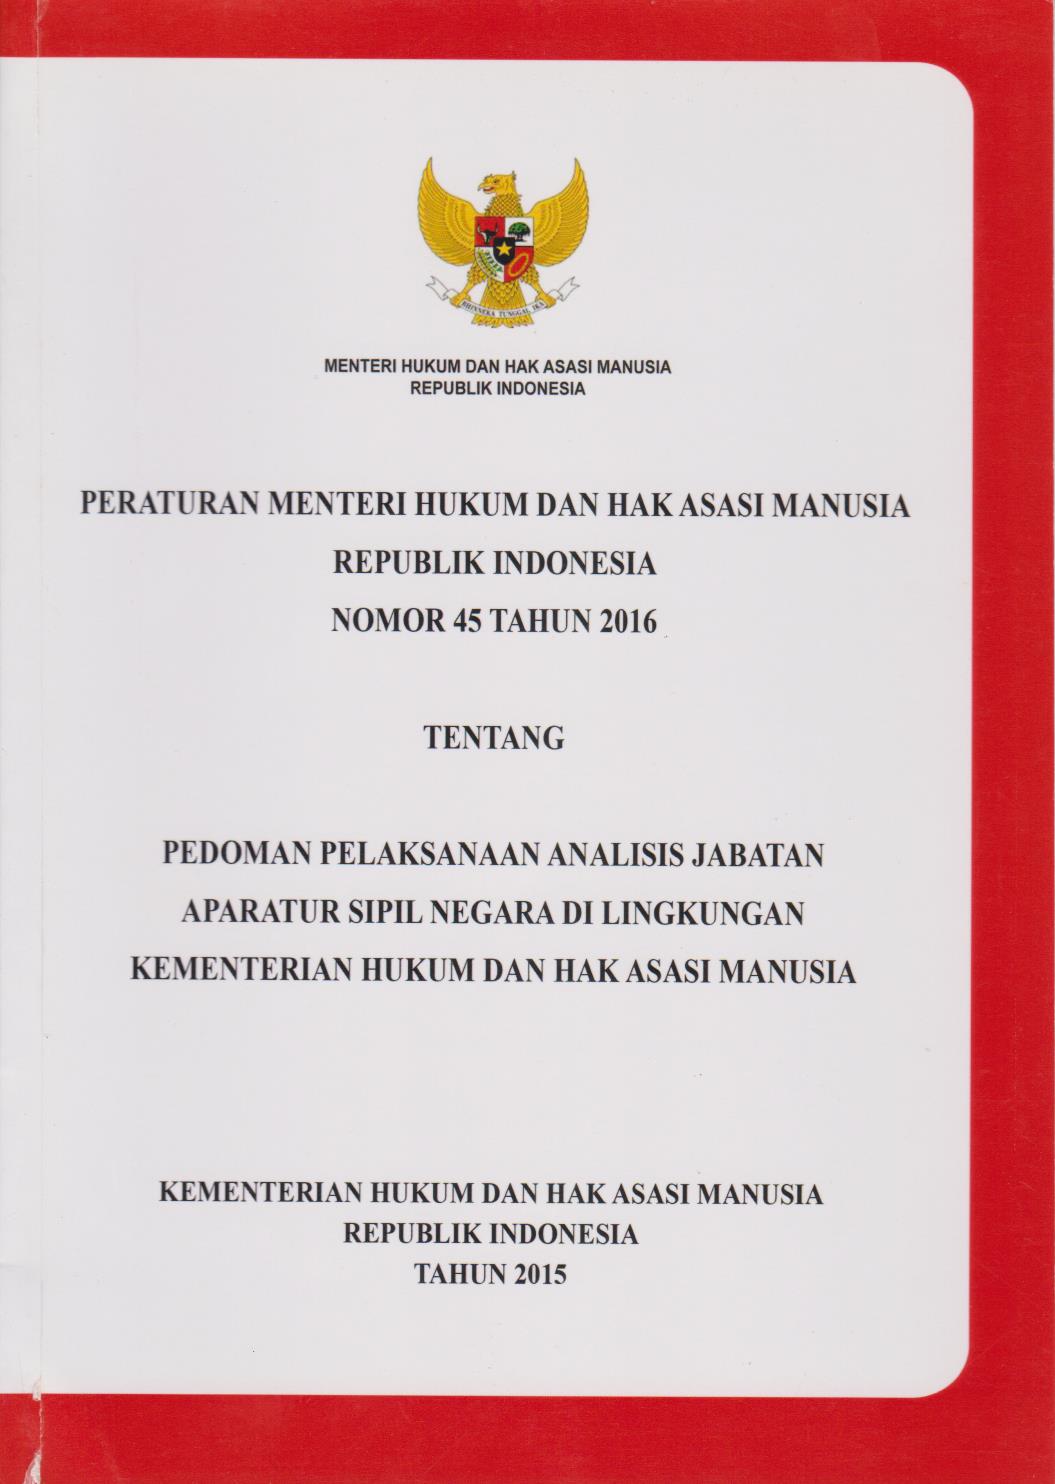 Peraturan Menteri Hukum Dan Hak Asasi Manusia Republik Indonesia Nomor 45 Tahun 2016 Tentang Pedoman Pelaksanaan Analisis Jabatan Aparatur Sipil Negara Di Lingkungan Kementerian Hukum Dan Hak Asasi Manusia